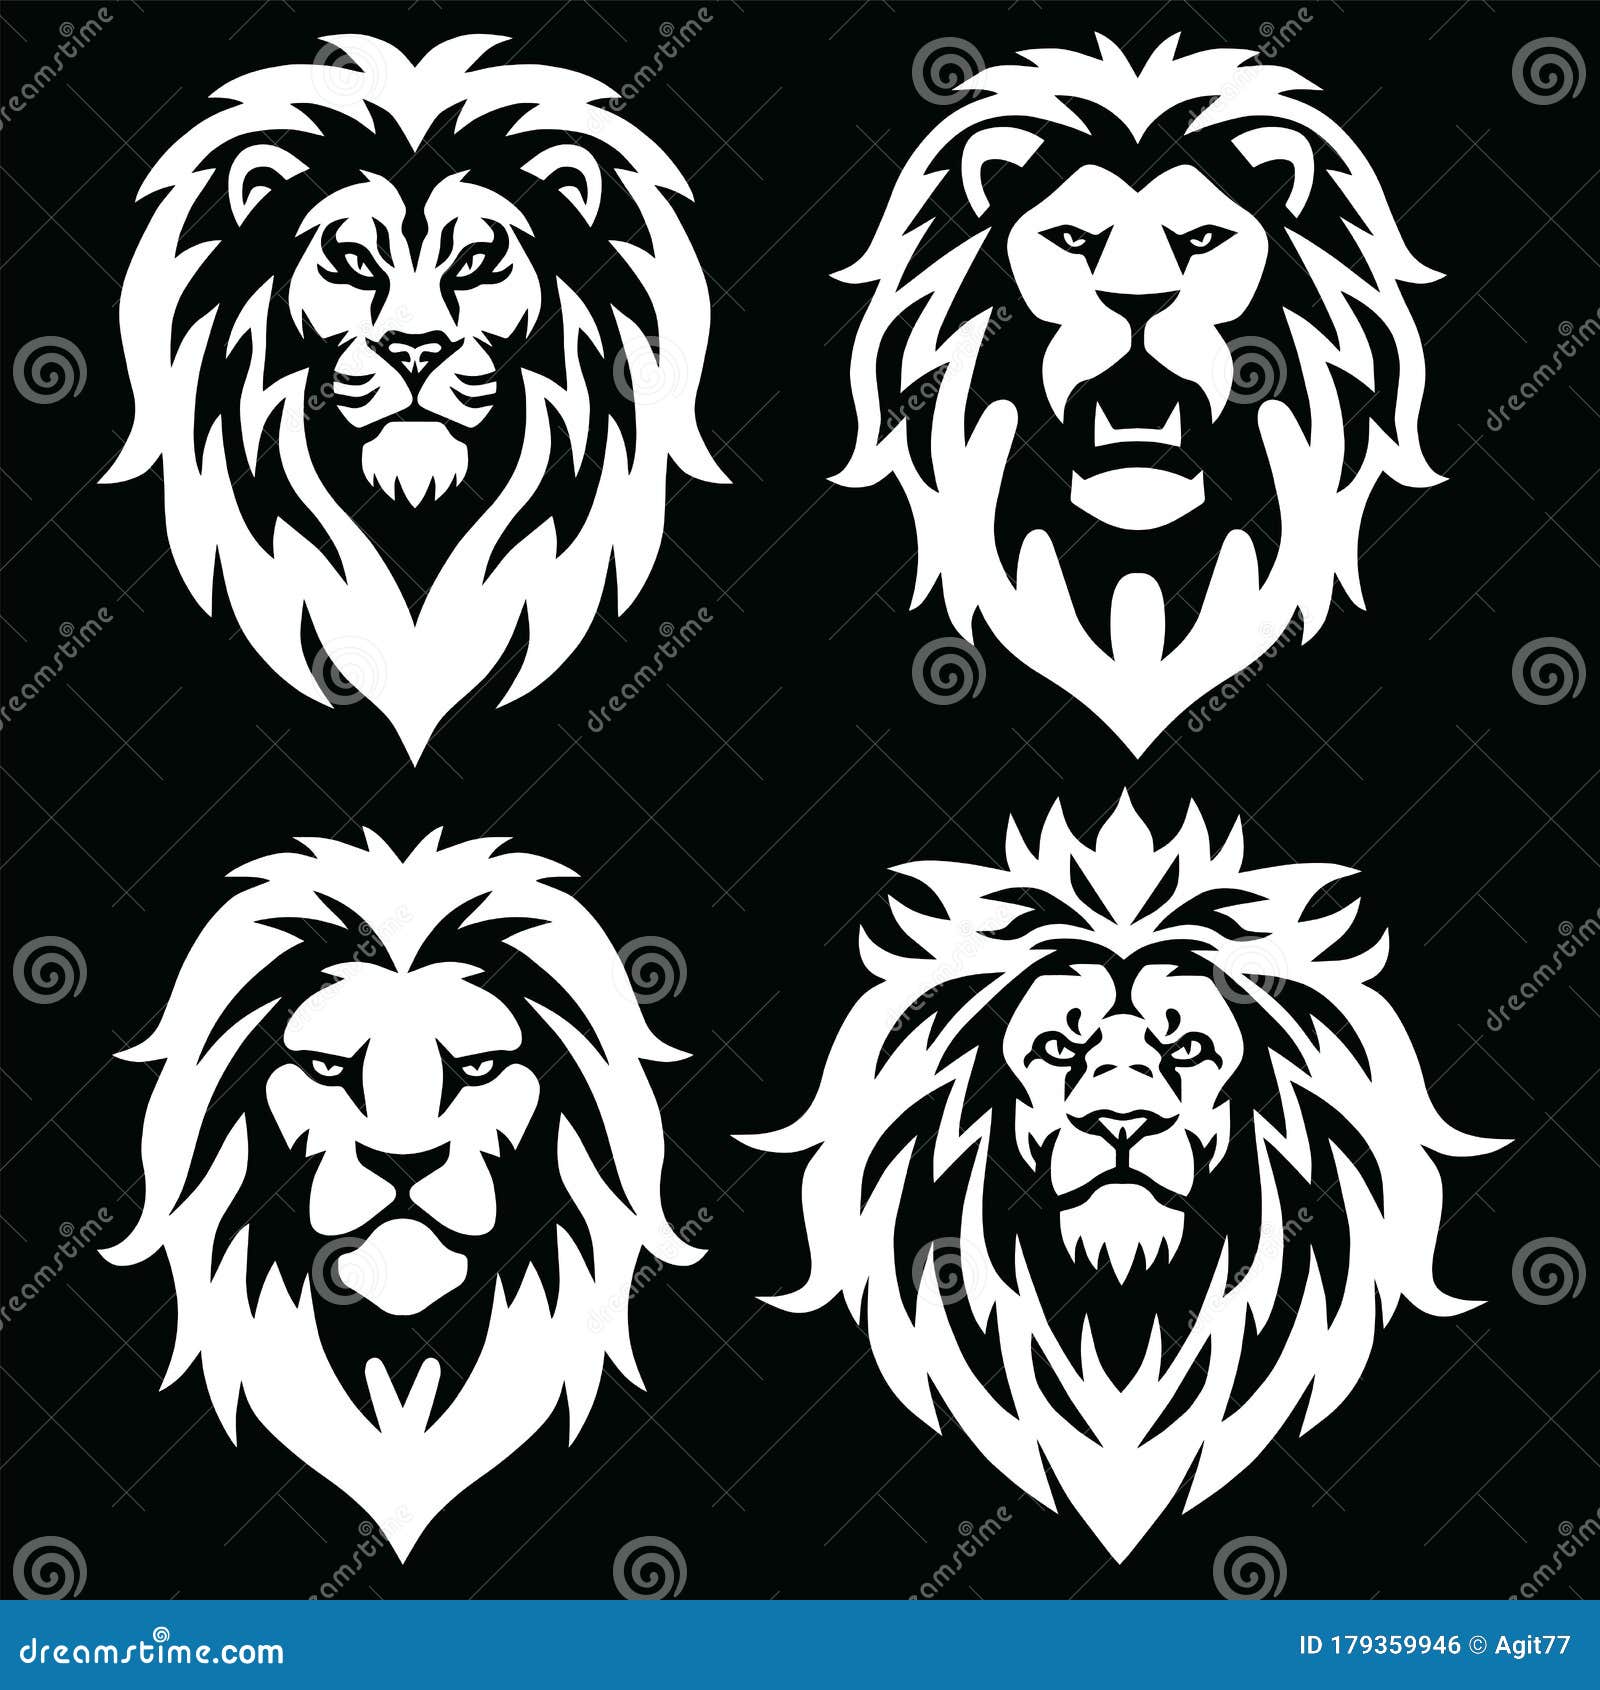 Lion Logo Mascot Set Icon Black And White Collection Pack Premium